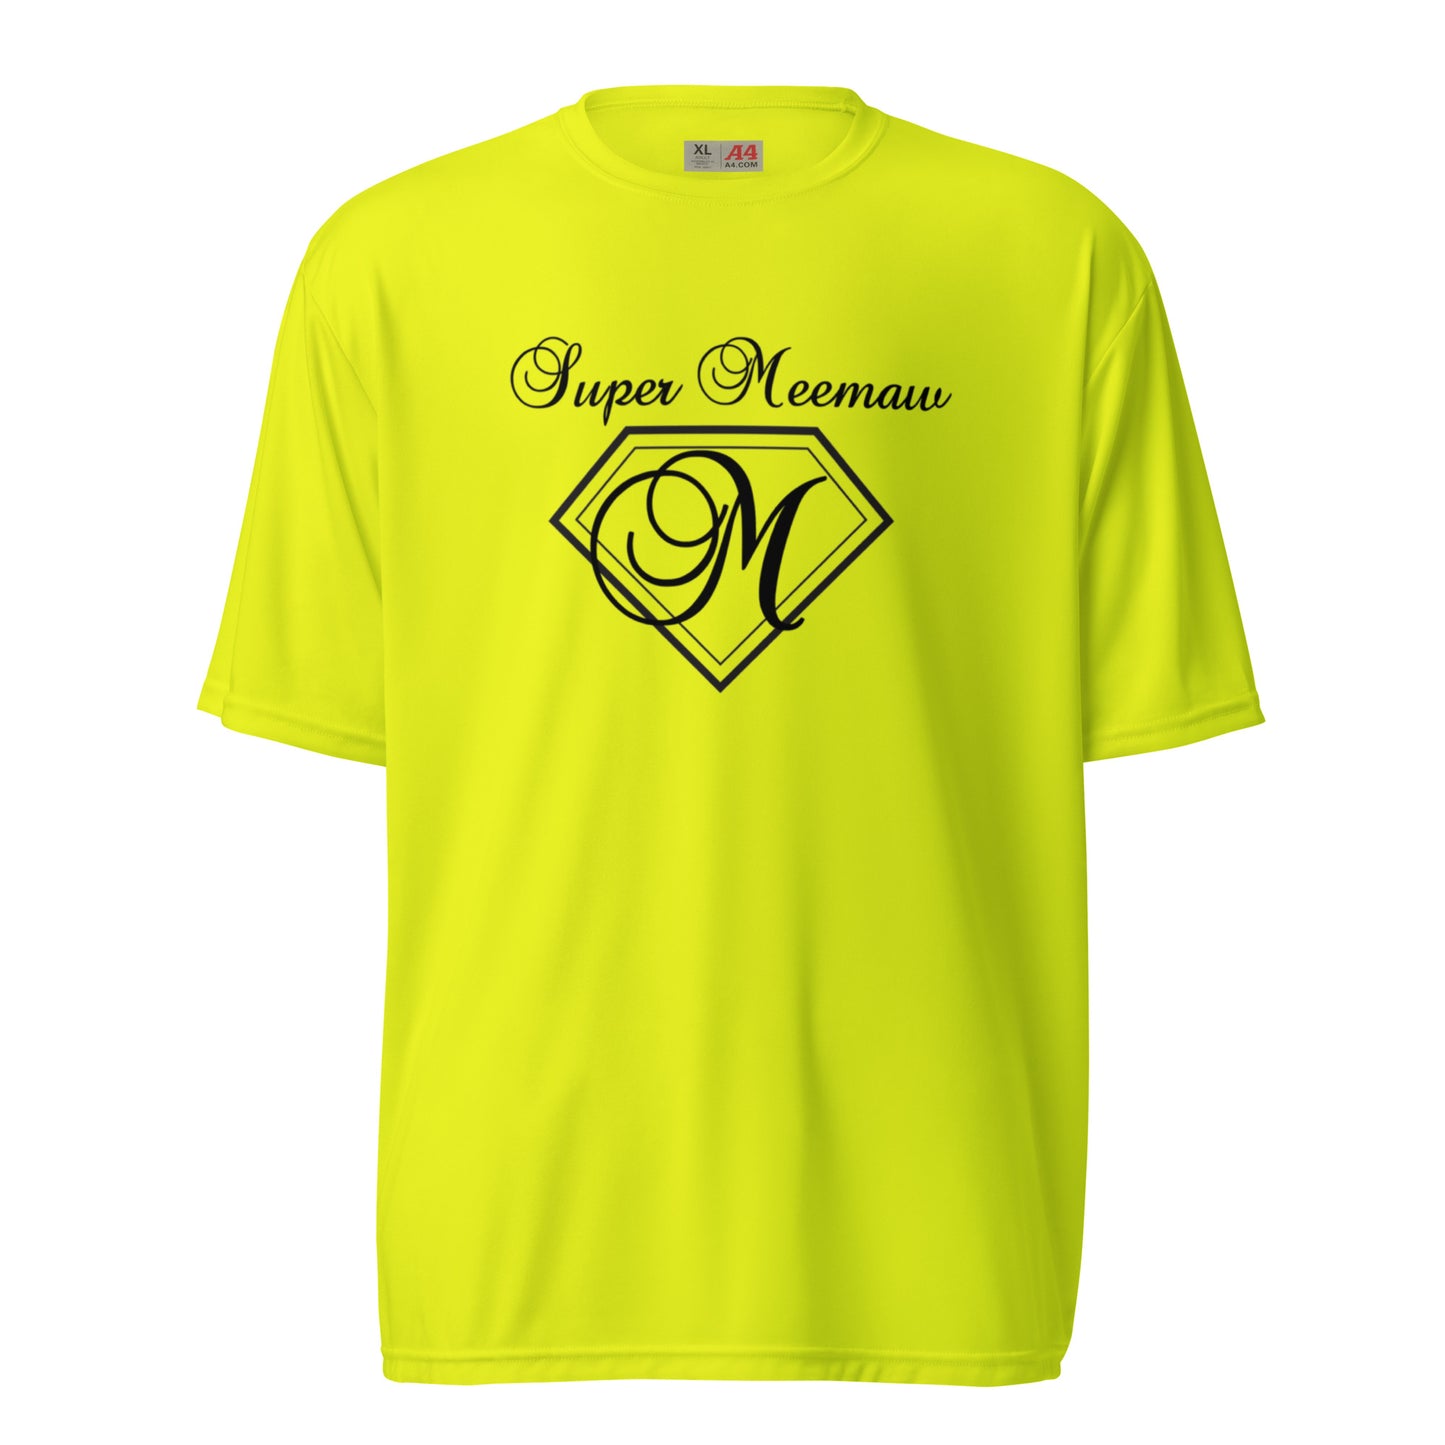 Super Meemaw unisex performance crew neck t-shirt - Black Print